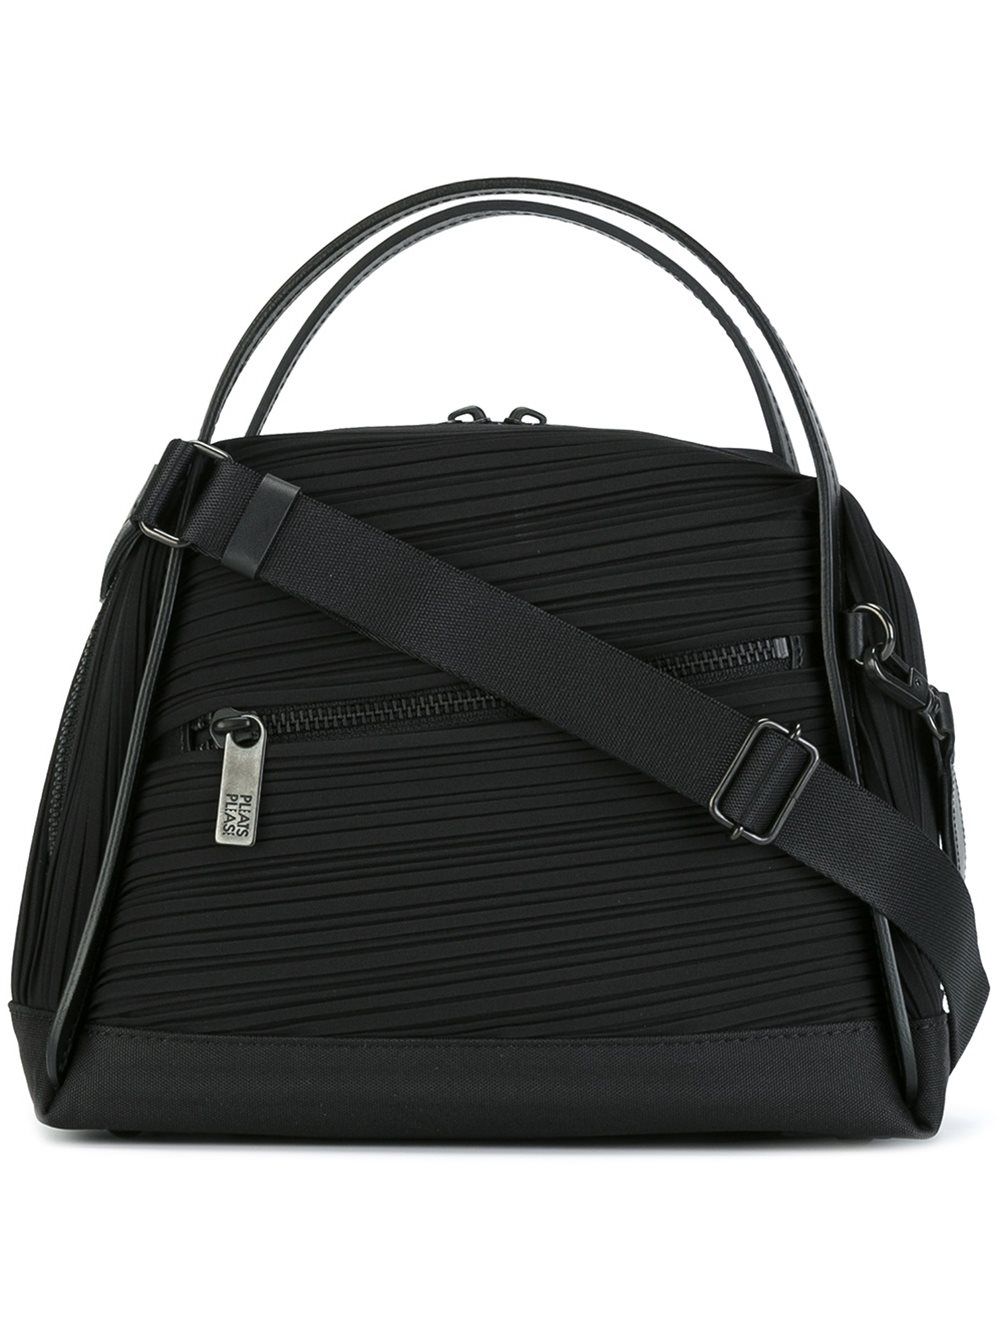 Lyst - Pleats Please Issey Miyake Handbag With Front Zip